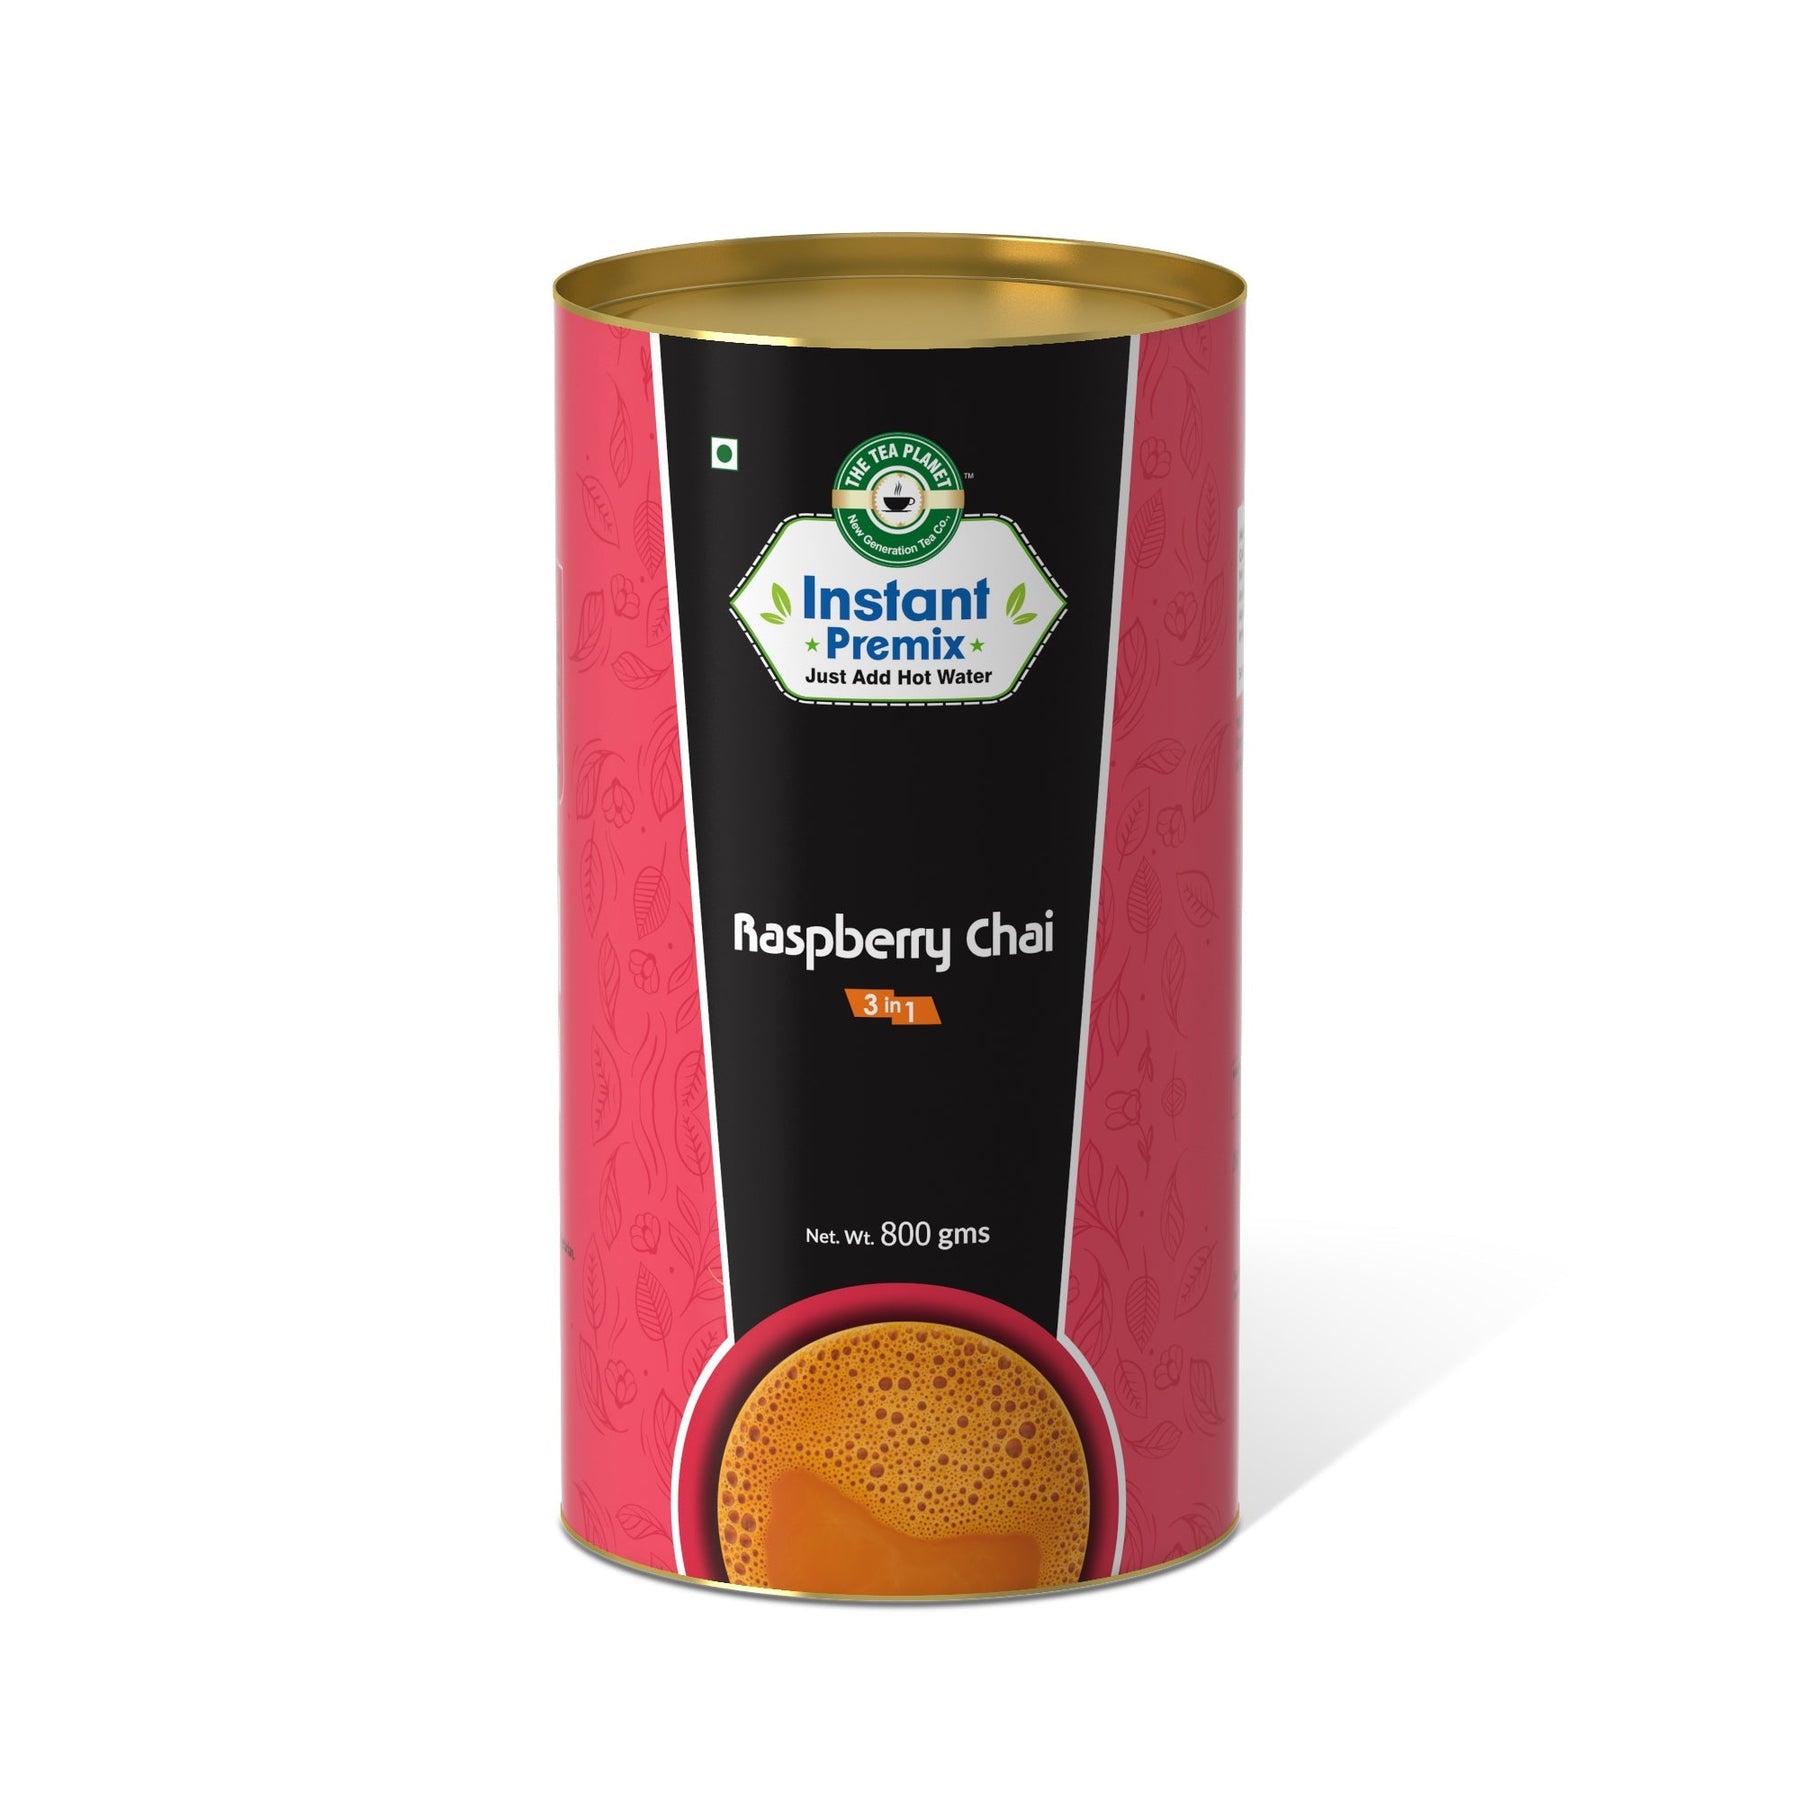 Raspberry Chai Premix (3 in 1) - 800 gms